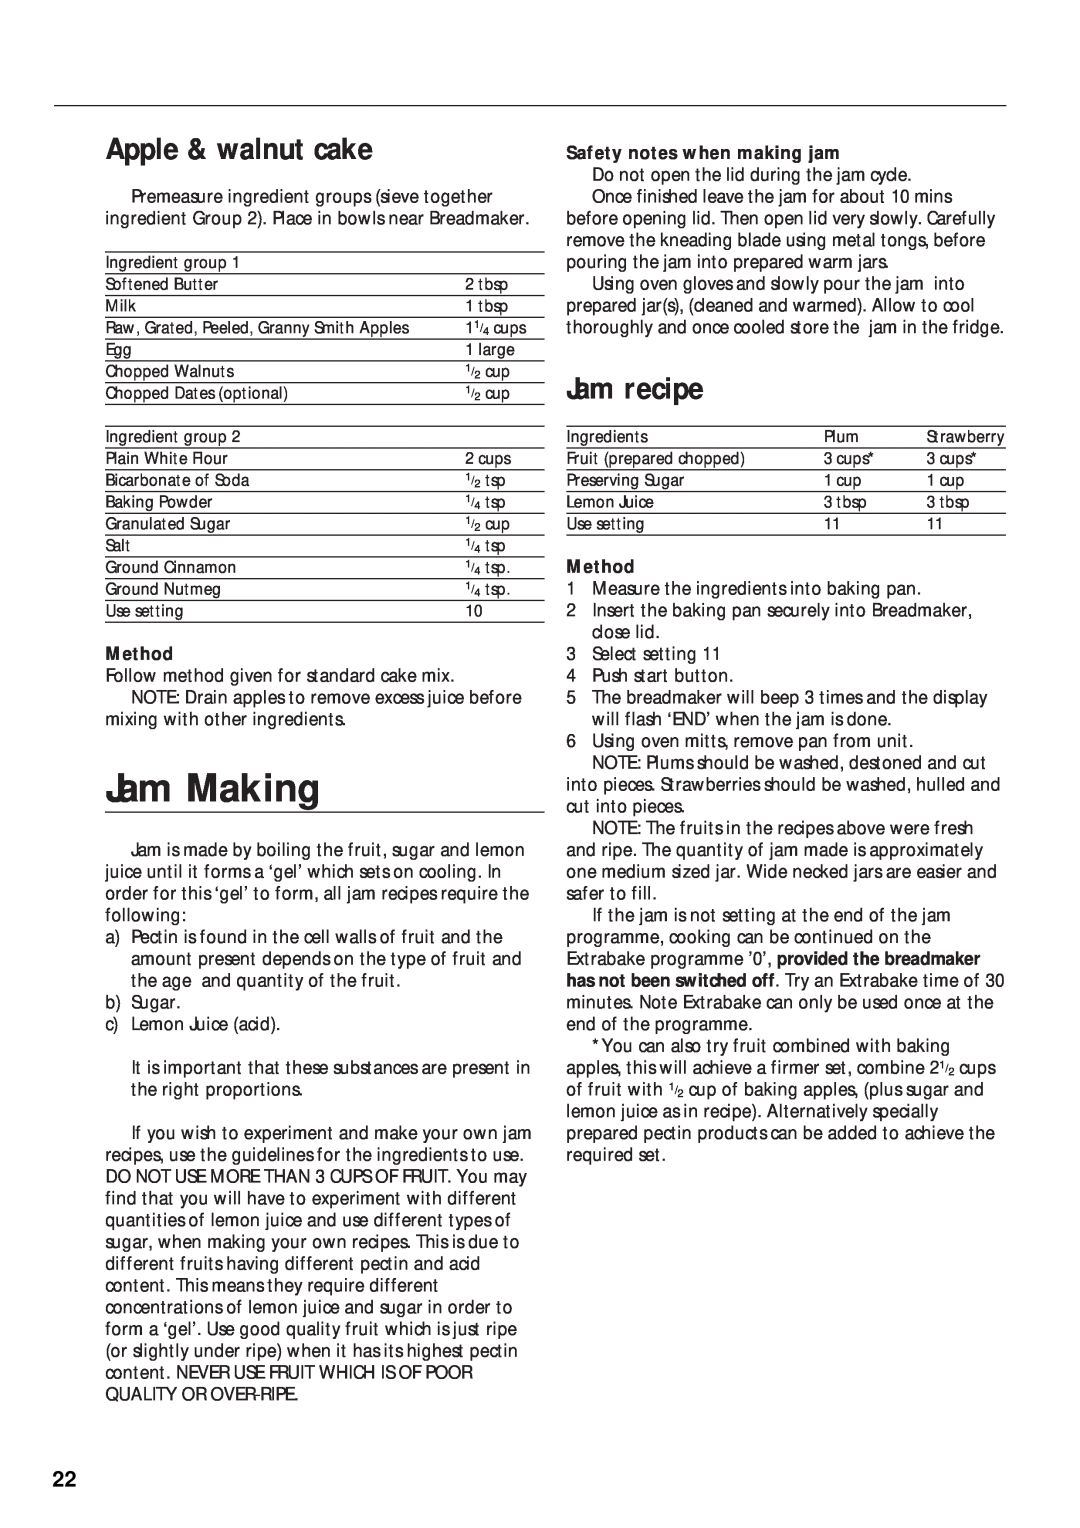 Morphy Richards 48220, 48230 manual Jam Making, Apple & walnut cake, Jam recipe, Method, Safety notes when making jam 